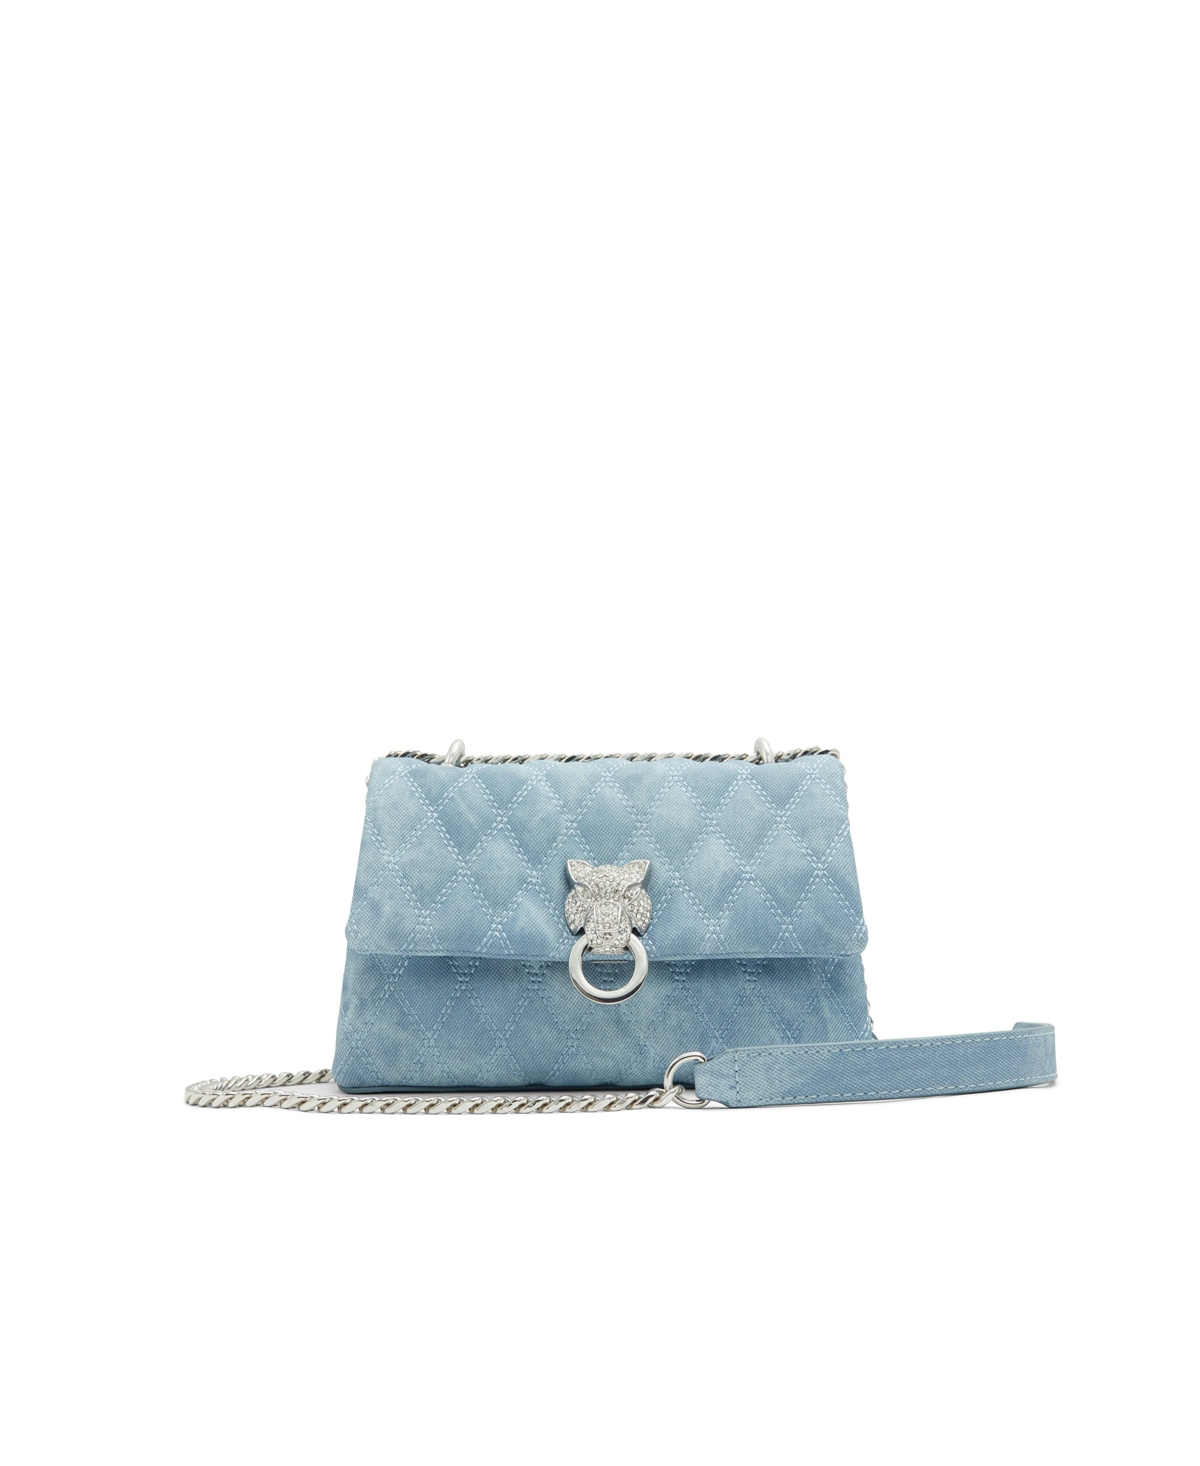 Piccaro Women's City Handbags - Blue